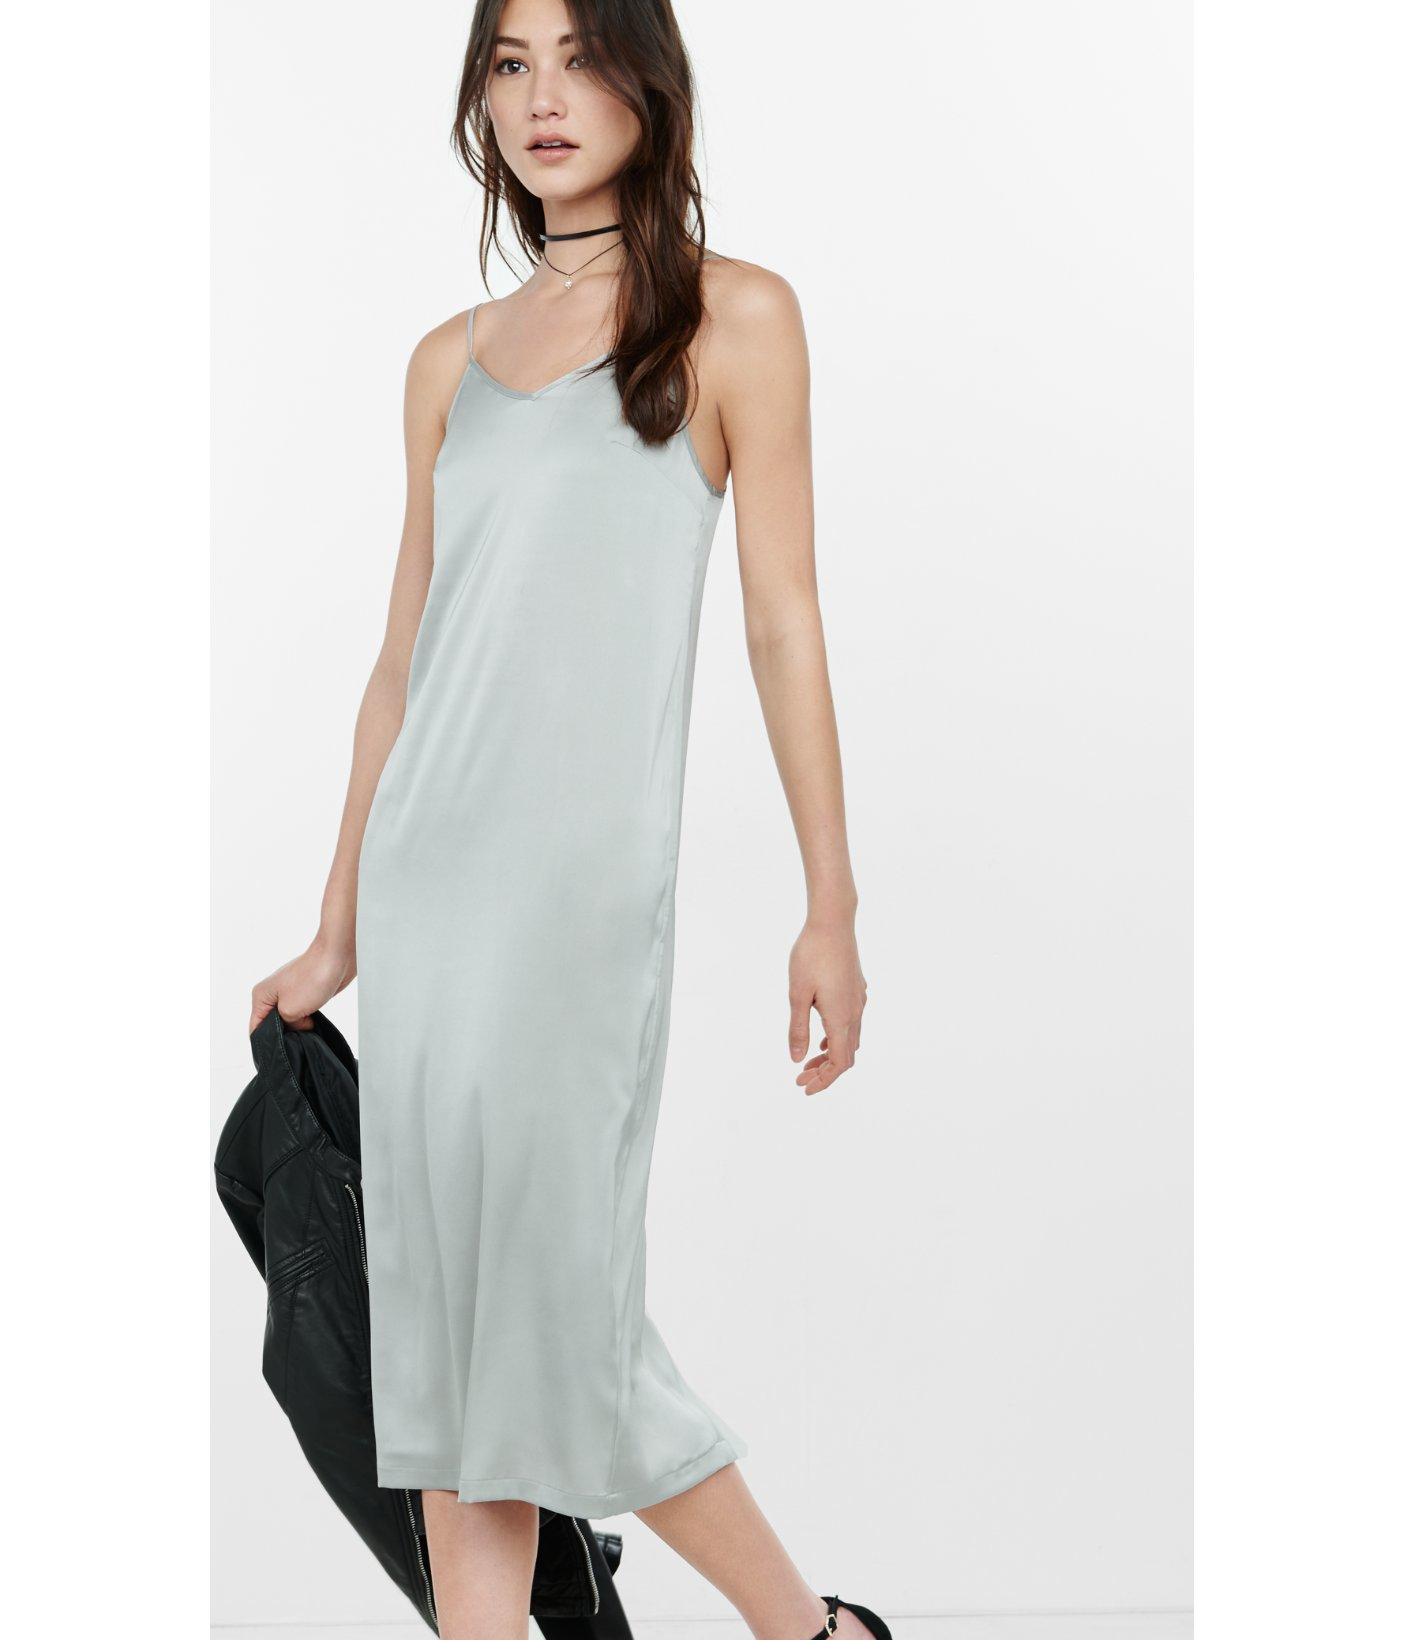 silver slip dress long